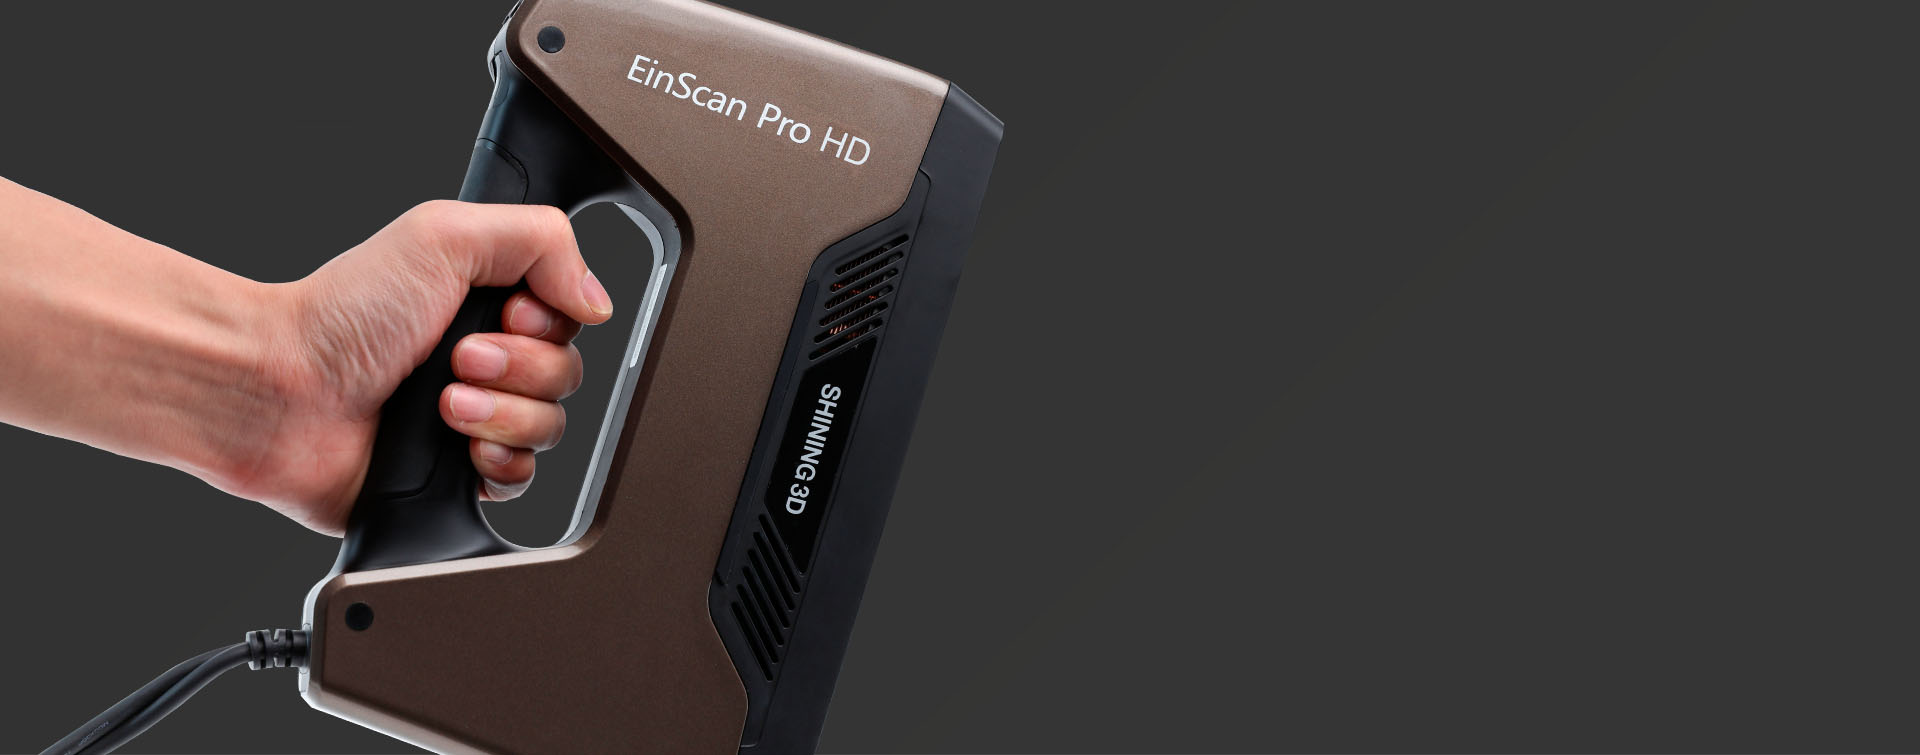 The EinScan Pro HD 3D scanner. Photo via Shining 3D.